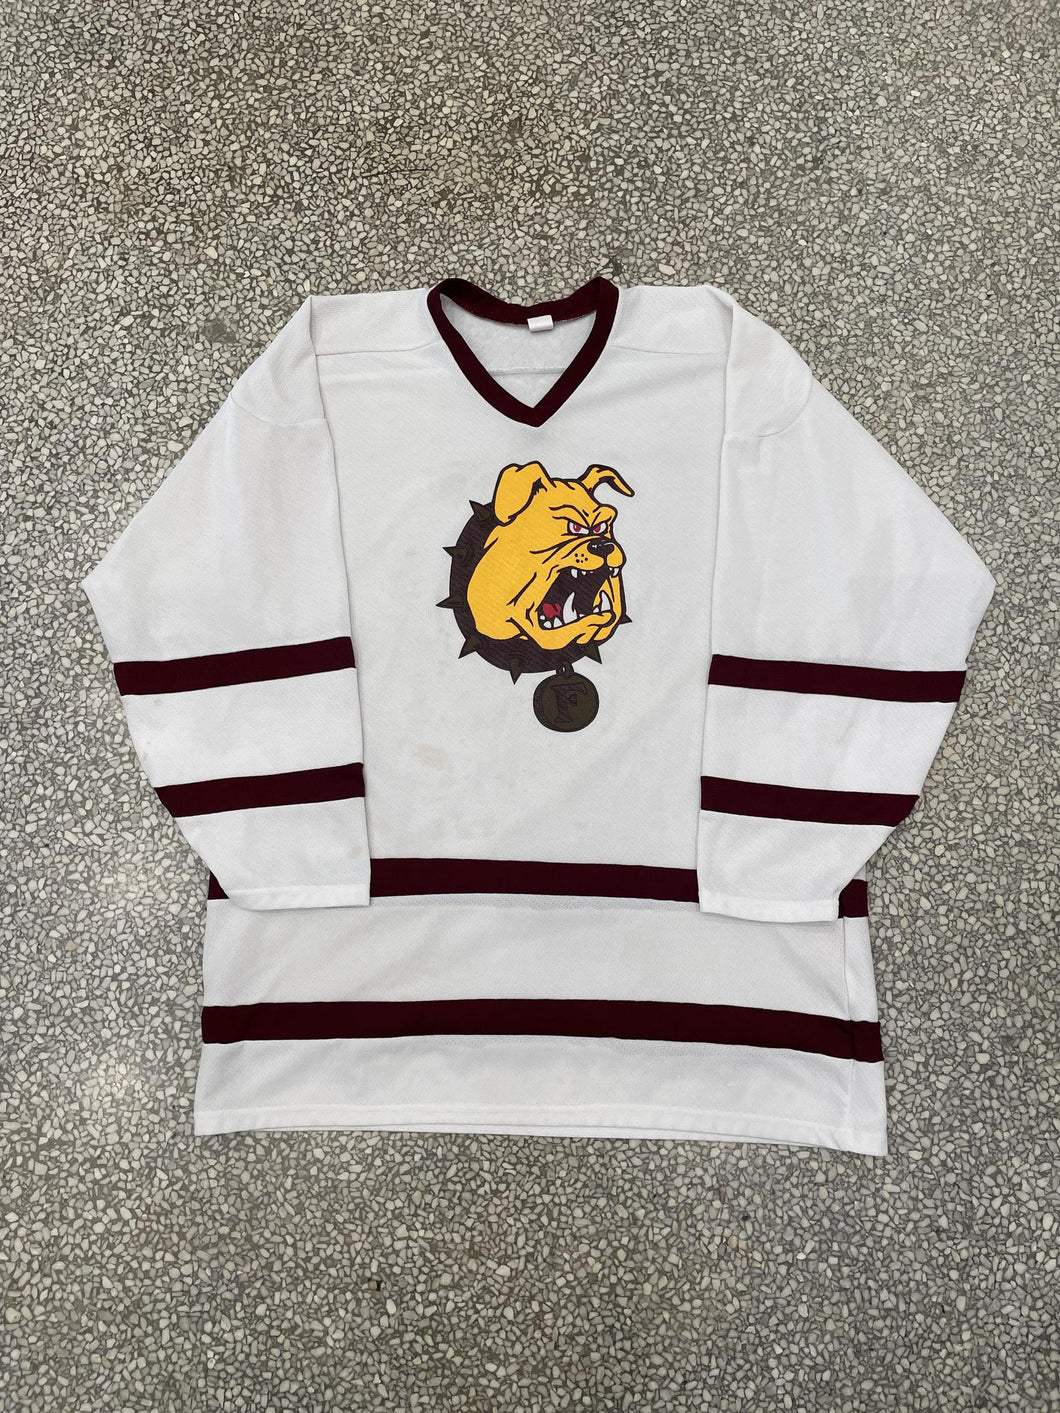 Vintage Hockey Shirt 